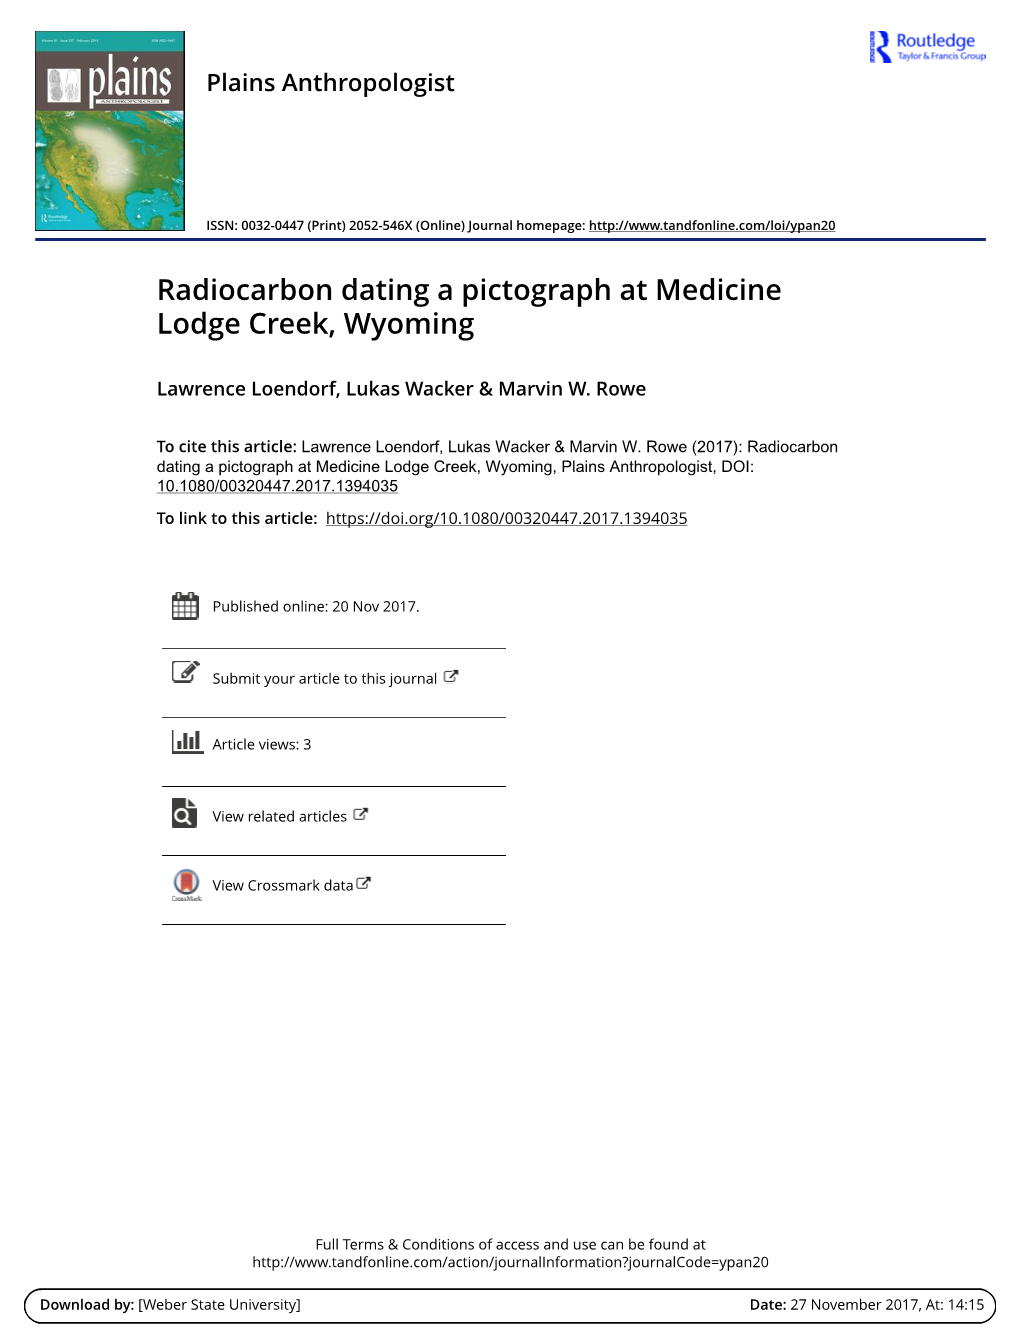 Radiocarbon Dating a Pictograph at Medicine Lodge Creek, Wyoming